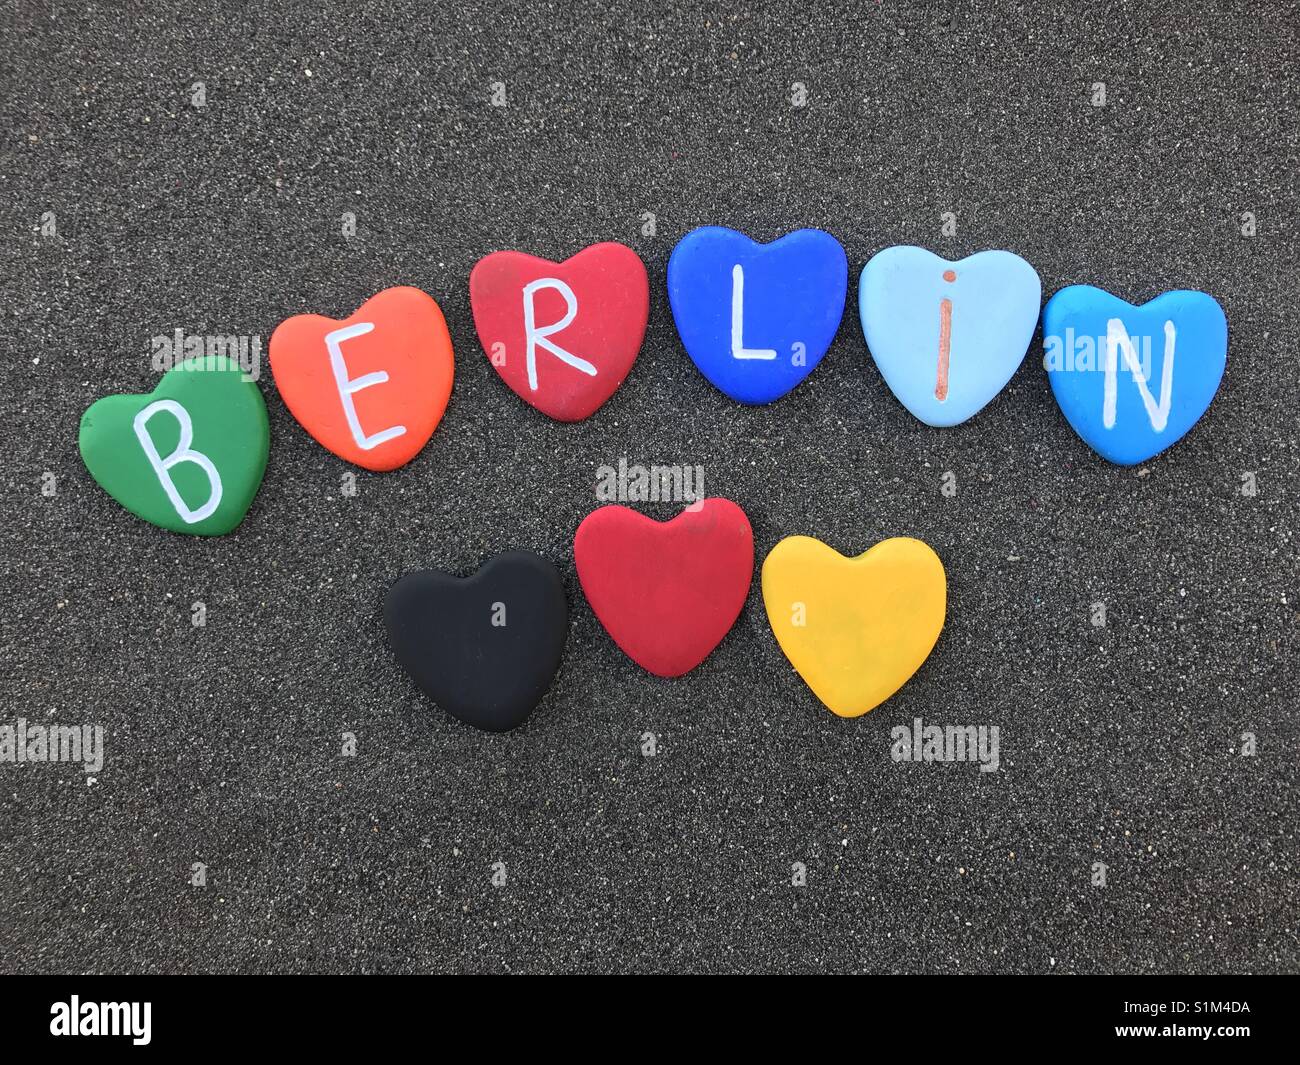 Berlin, Ich Liebe Dich, Berlin, I love you Stock Photo